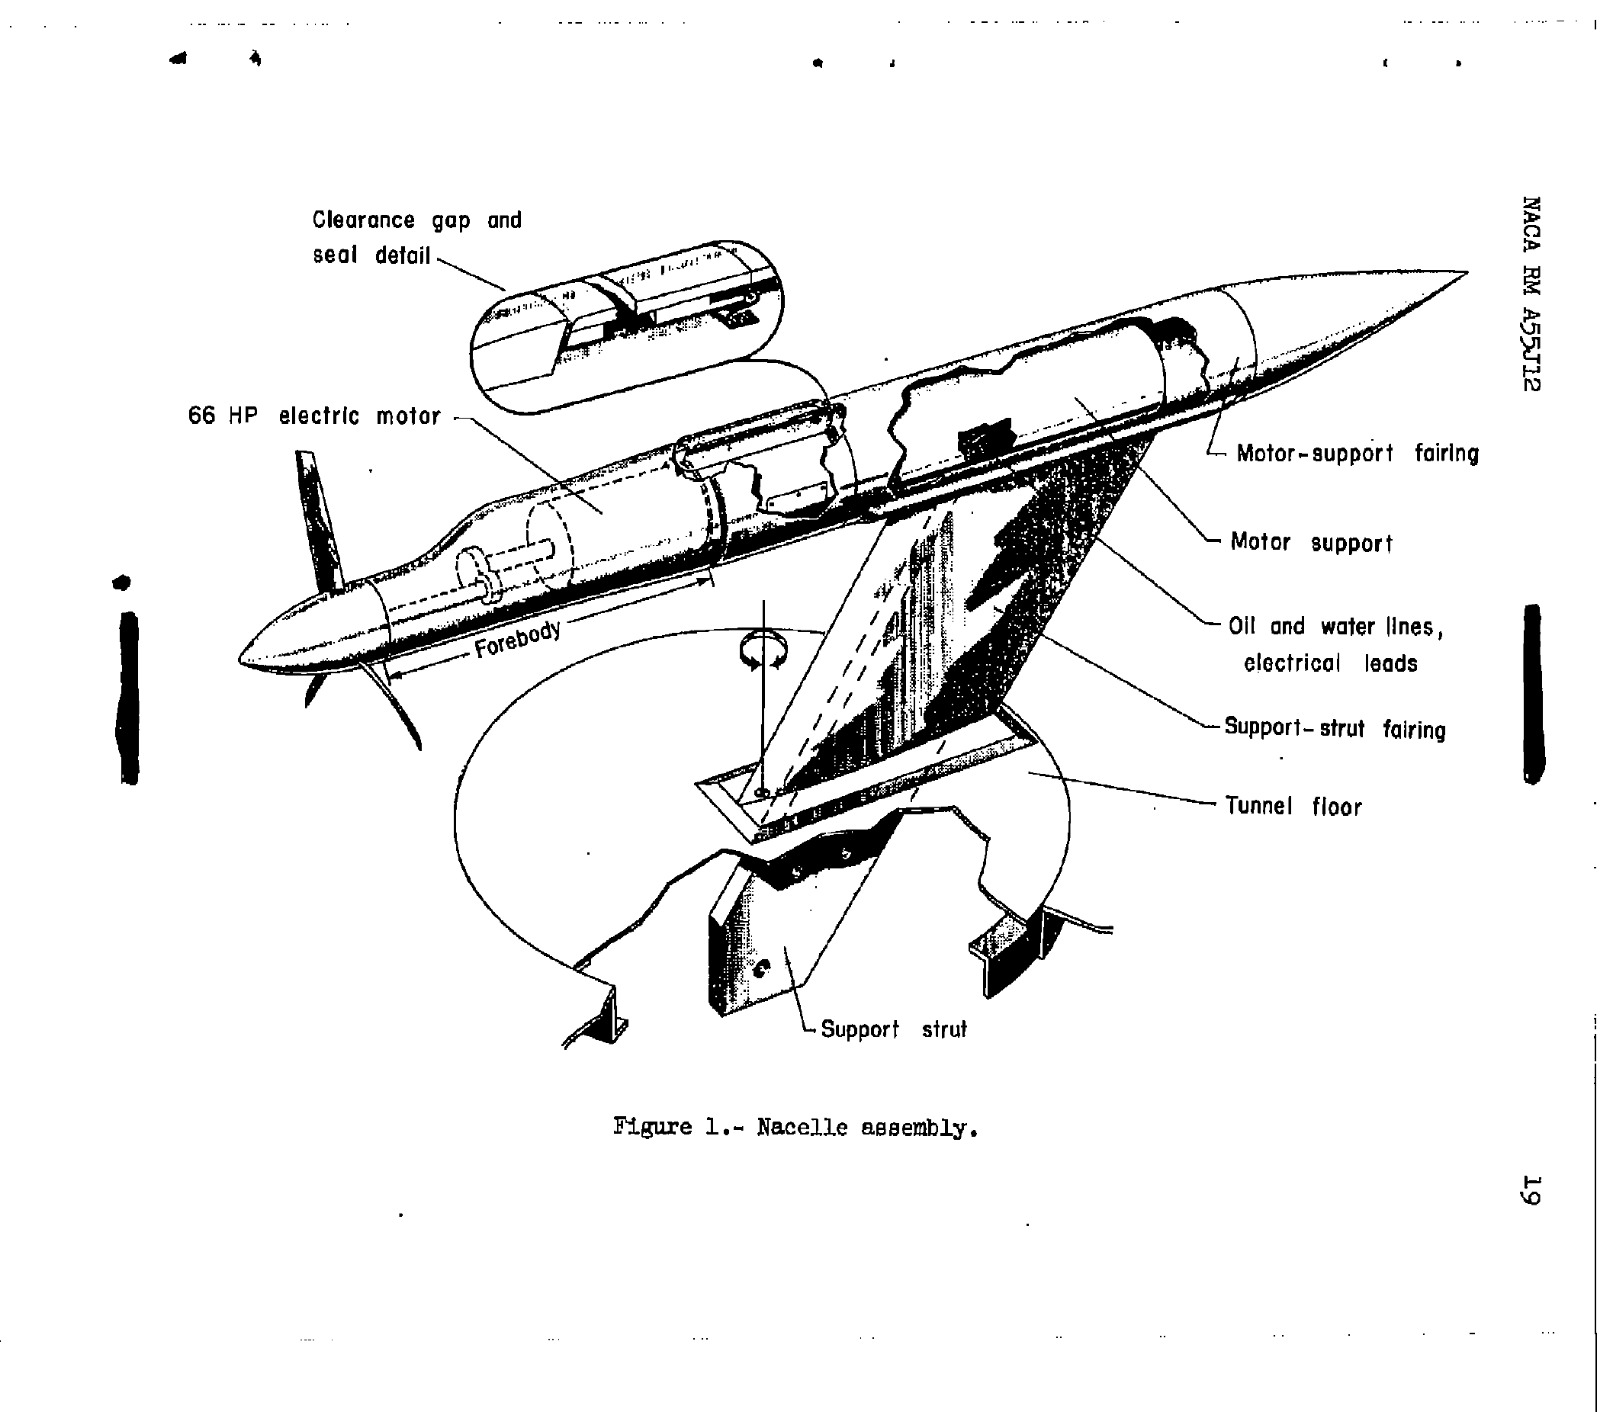 130+ 4,088 page 1950s Aircraft Airplane PROPELLER Aerodynamics Studies on CD